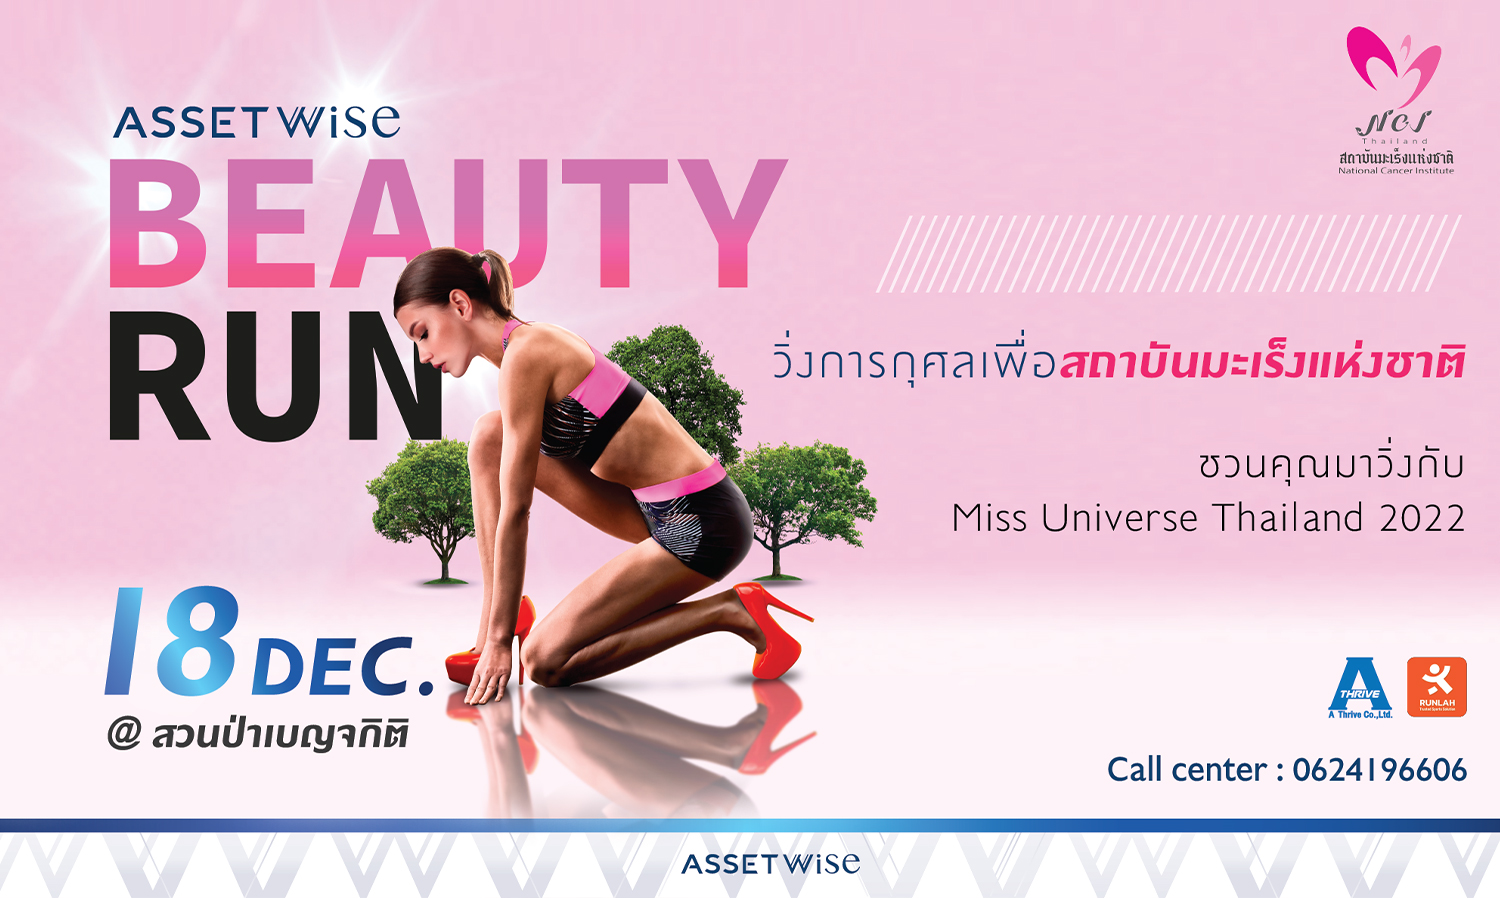 AssetWise BEAUTY RUN 2022 ชวนมาวิ่งในสวนสวยกลางเมืองกับ Miss Universe Thailand 2022 เพื่อสถาบันมะเร็งแห่งชาติ